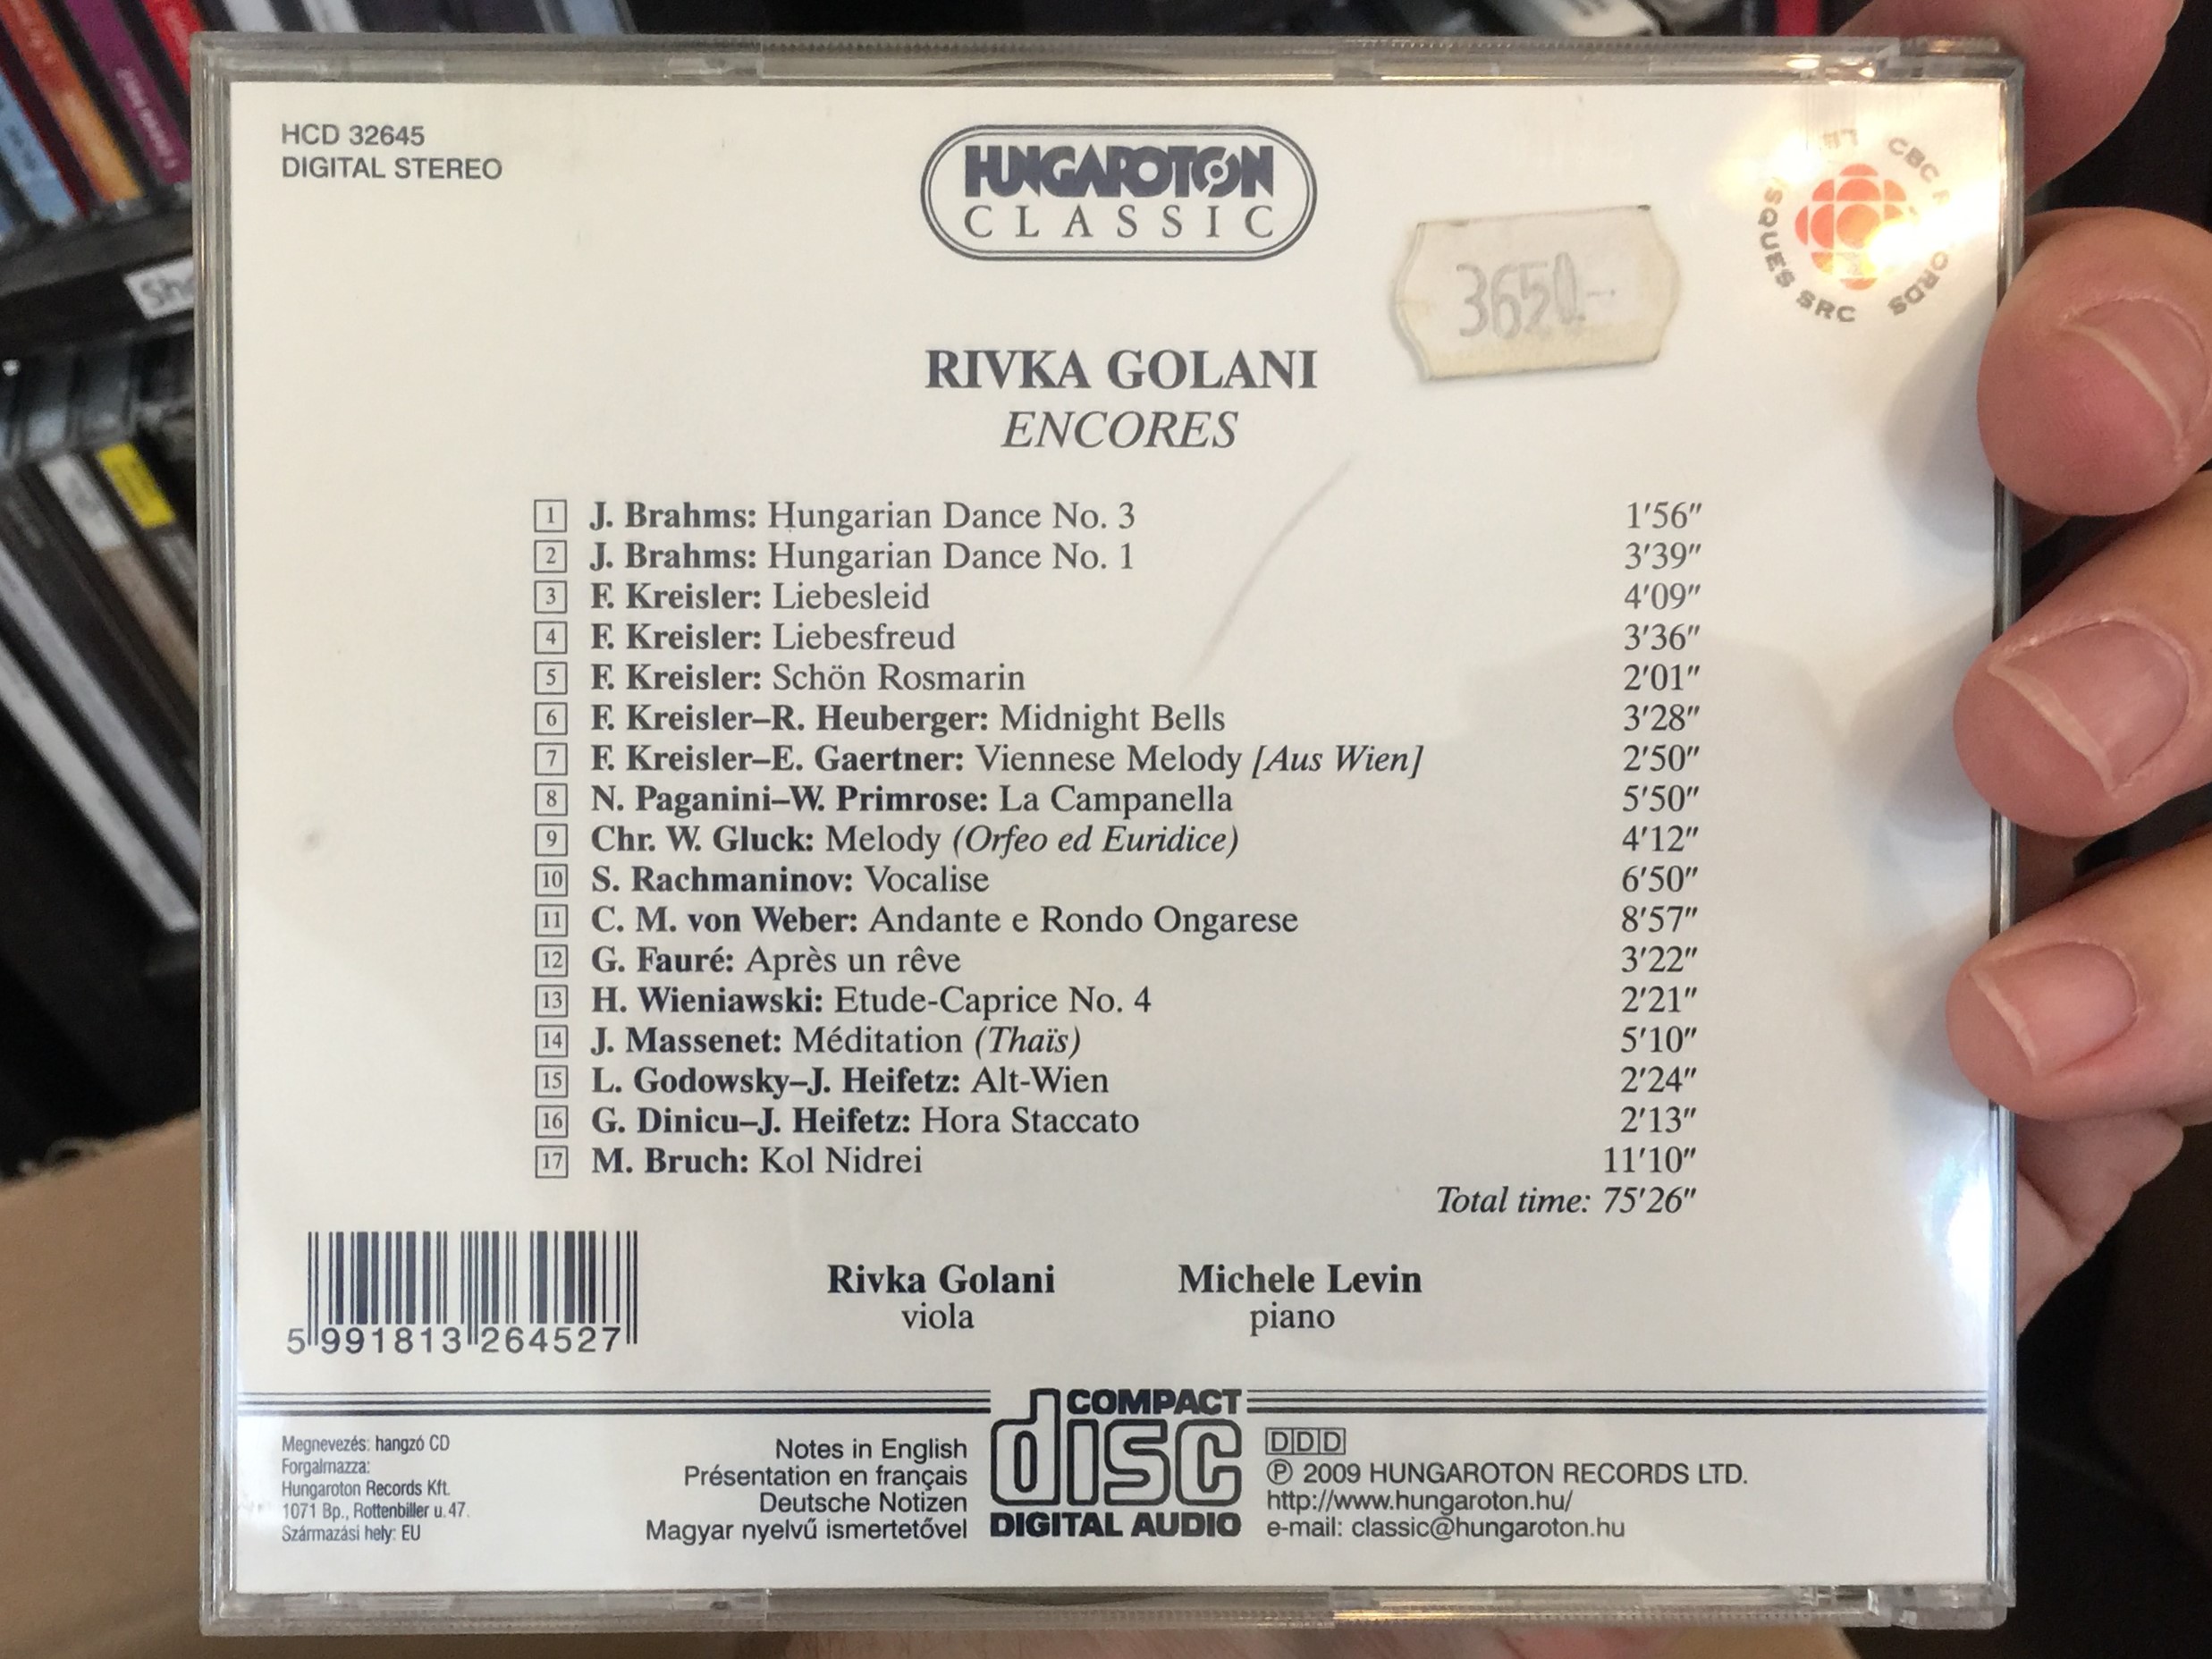 rivka-golani-viola-encores-michele-levin-piano-hungaroton-classic-audio-cd-2009-stereo-hcd-32645-2-.jpg